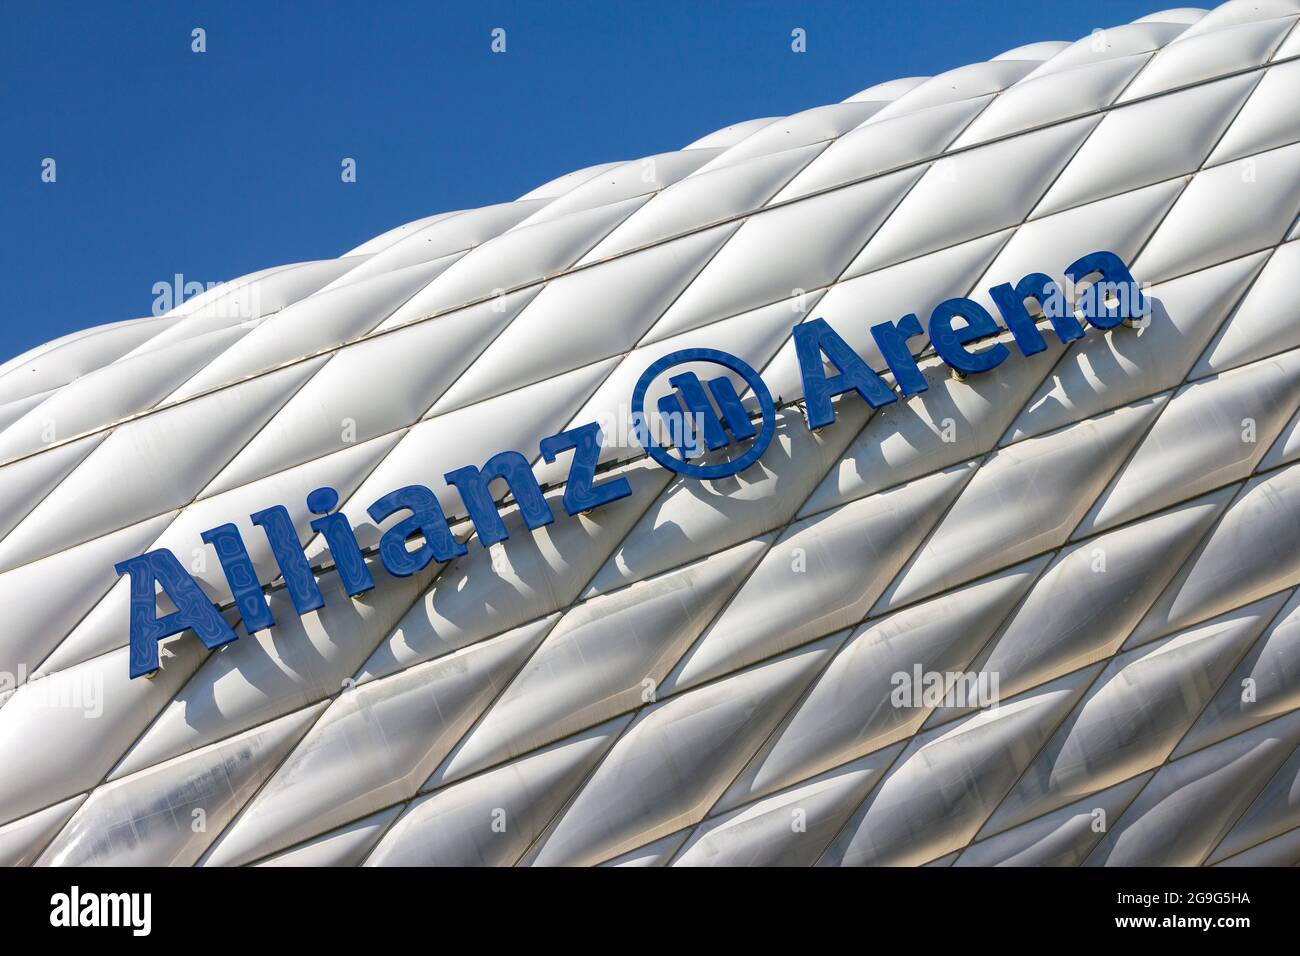 Munich, Germany - 08 26 2011: Allianz Arena stadium in Munich, Germany on a summer day. Stock Photo